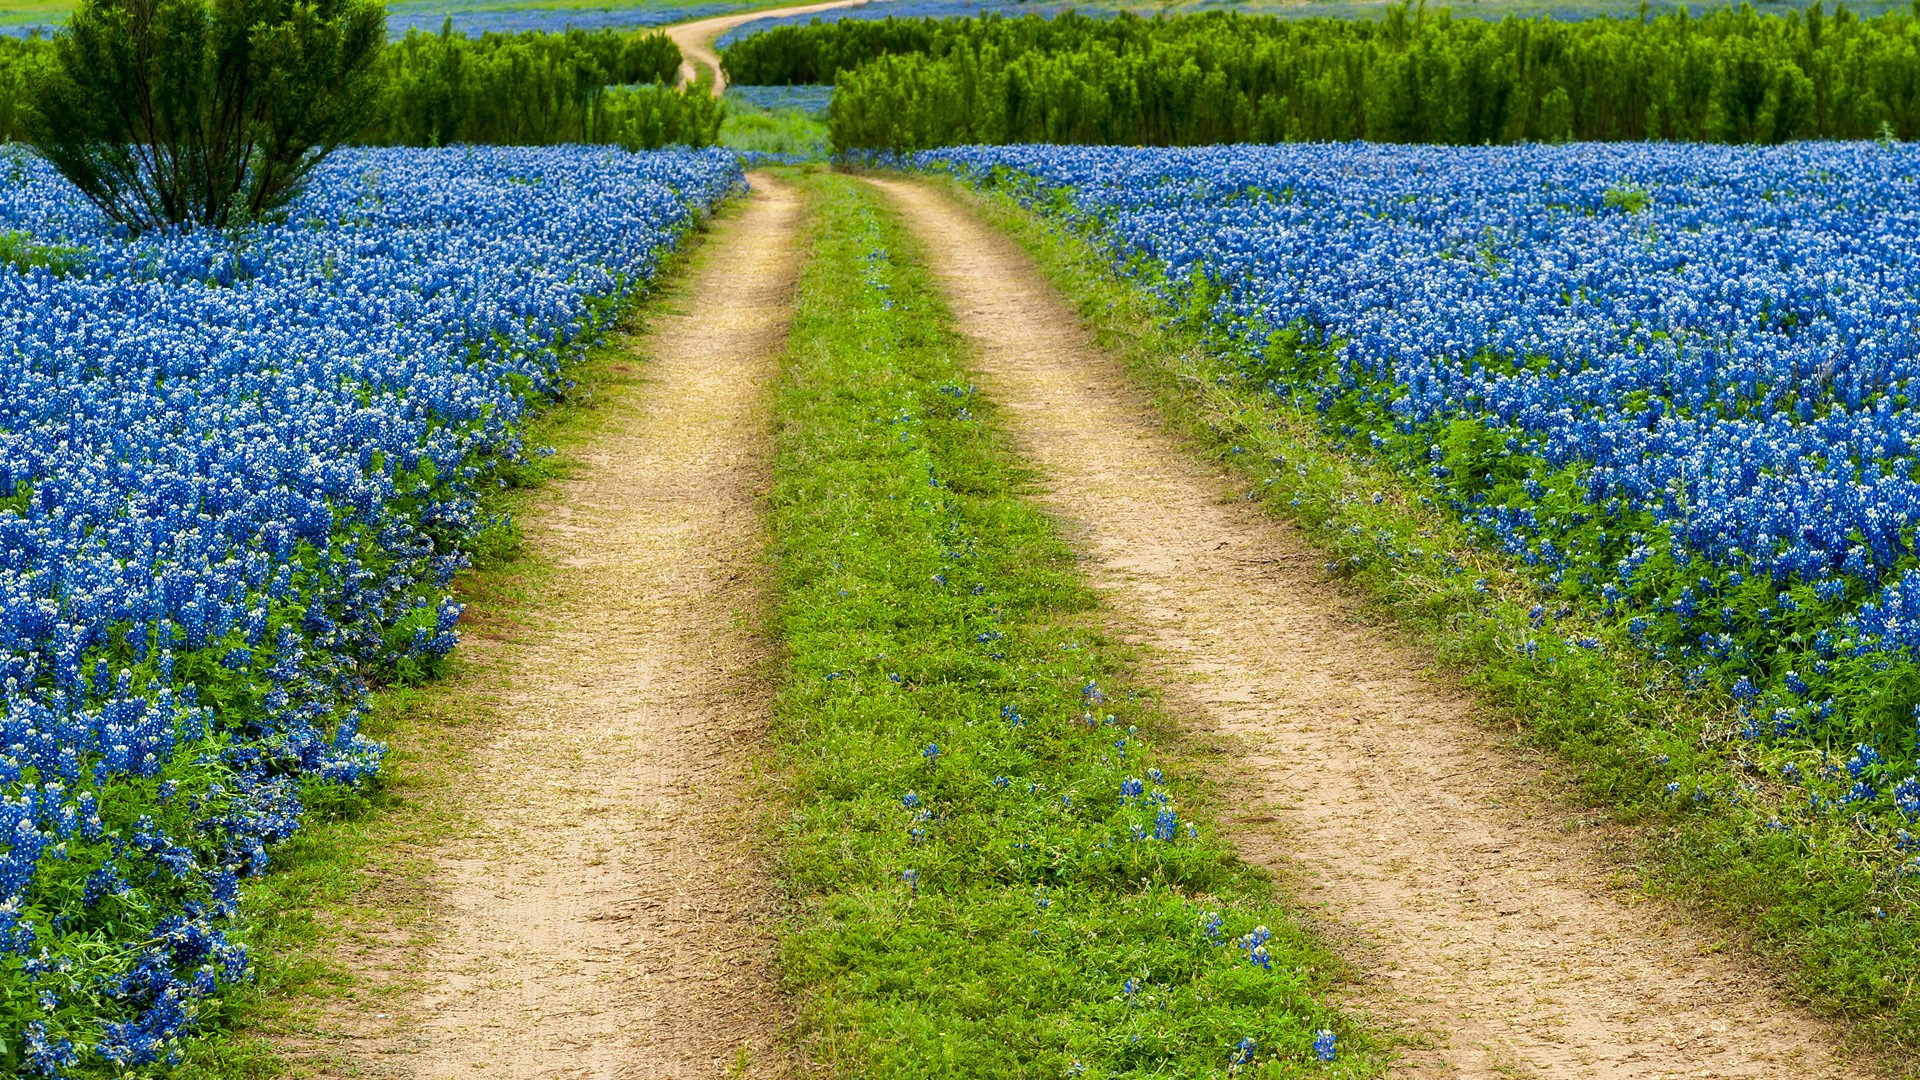 Grass Nature Landscape Trees Plants Road Wildflowers Flowers Texas Bluebonnet Flowers Texas USA 1920x1080